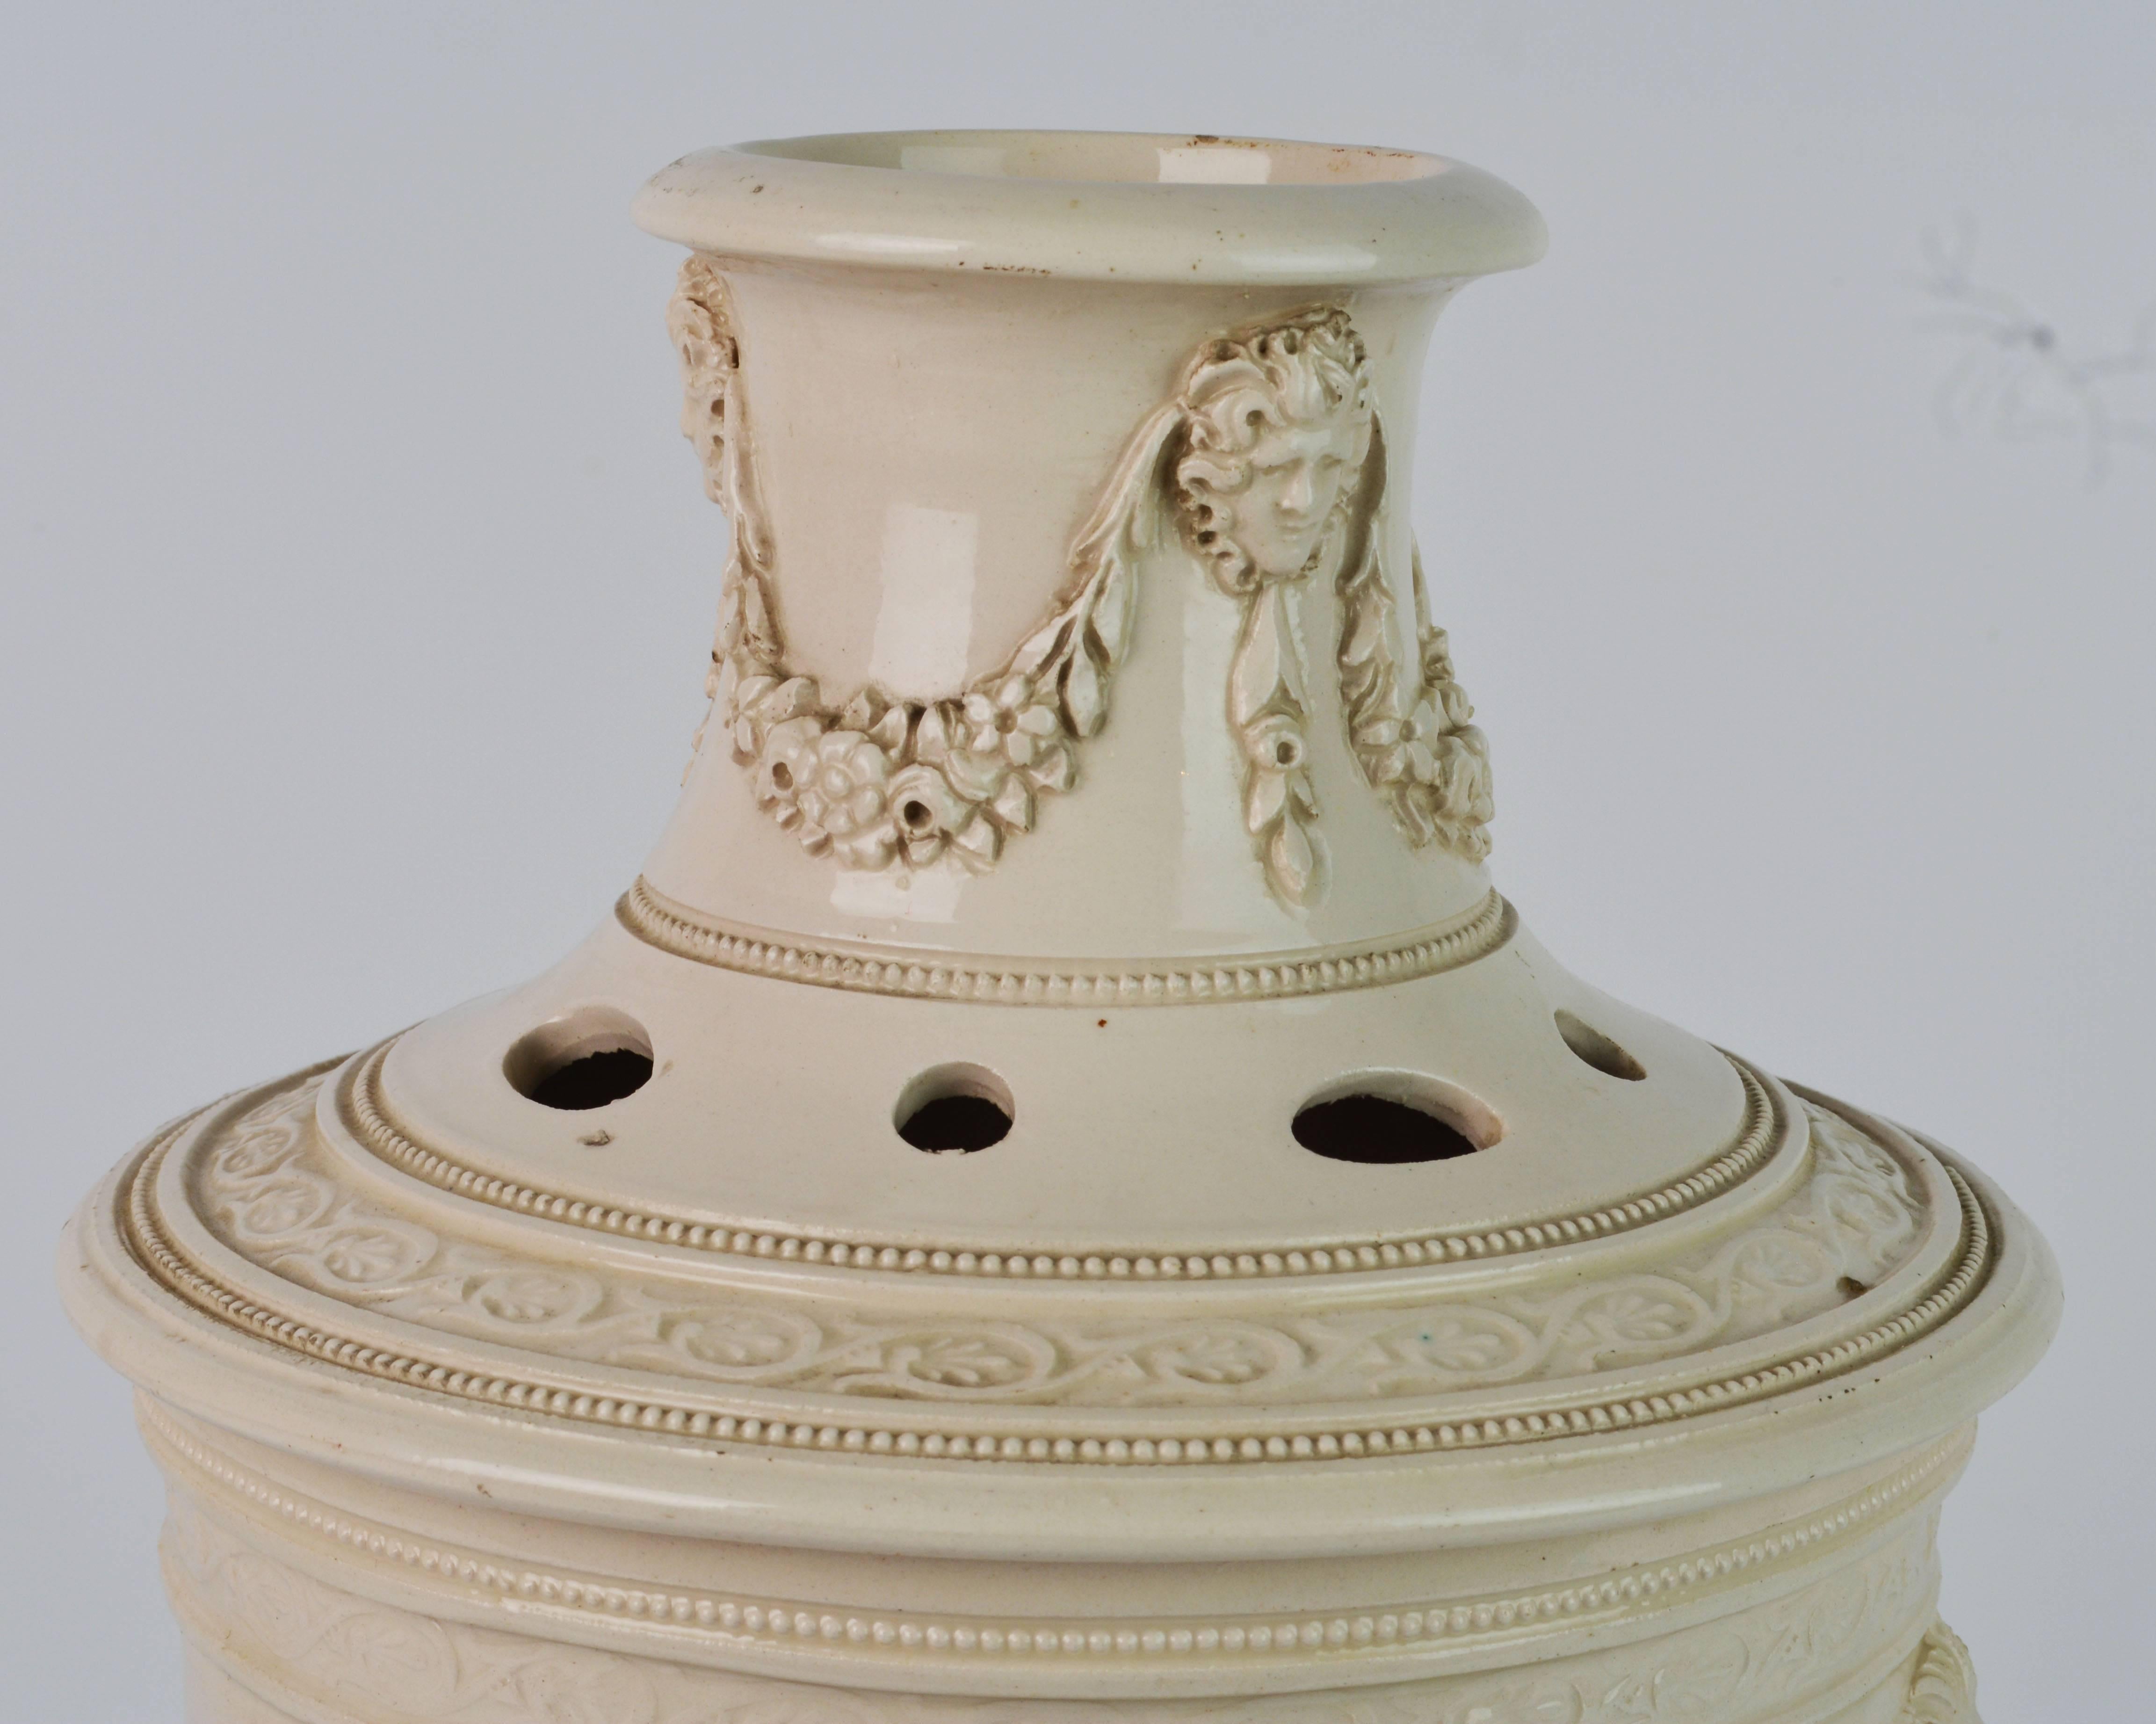 English 18th Century Leeds Cream Ware Style Covered Potpourri Jar or Urn